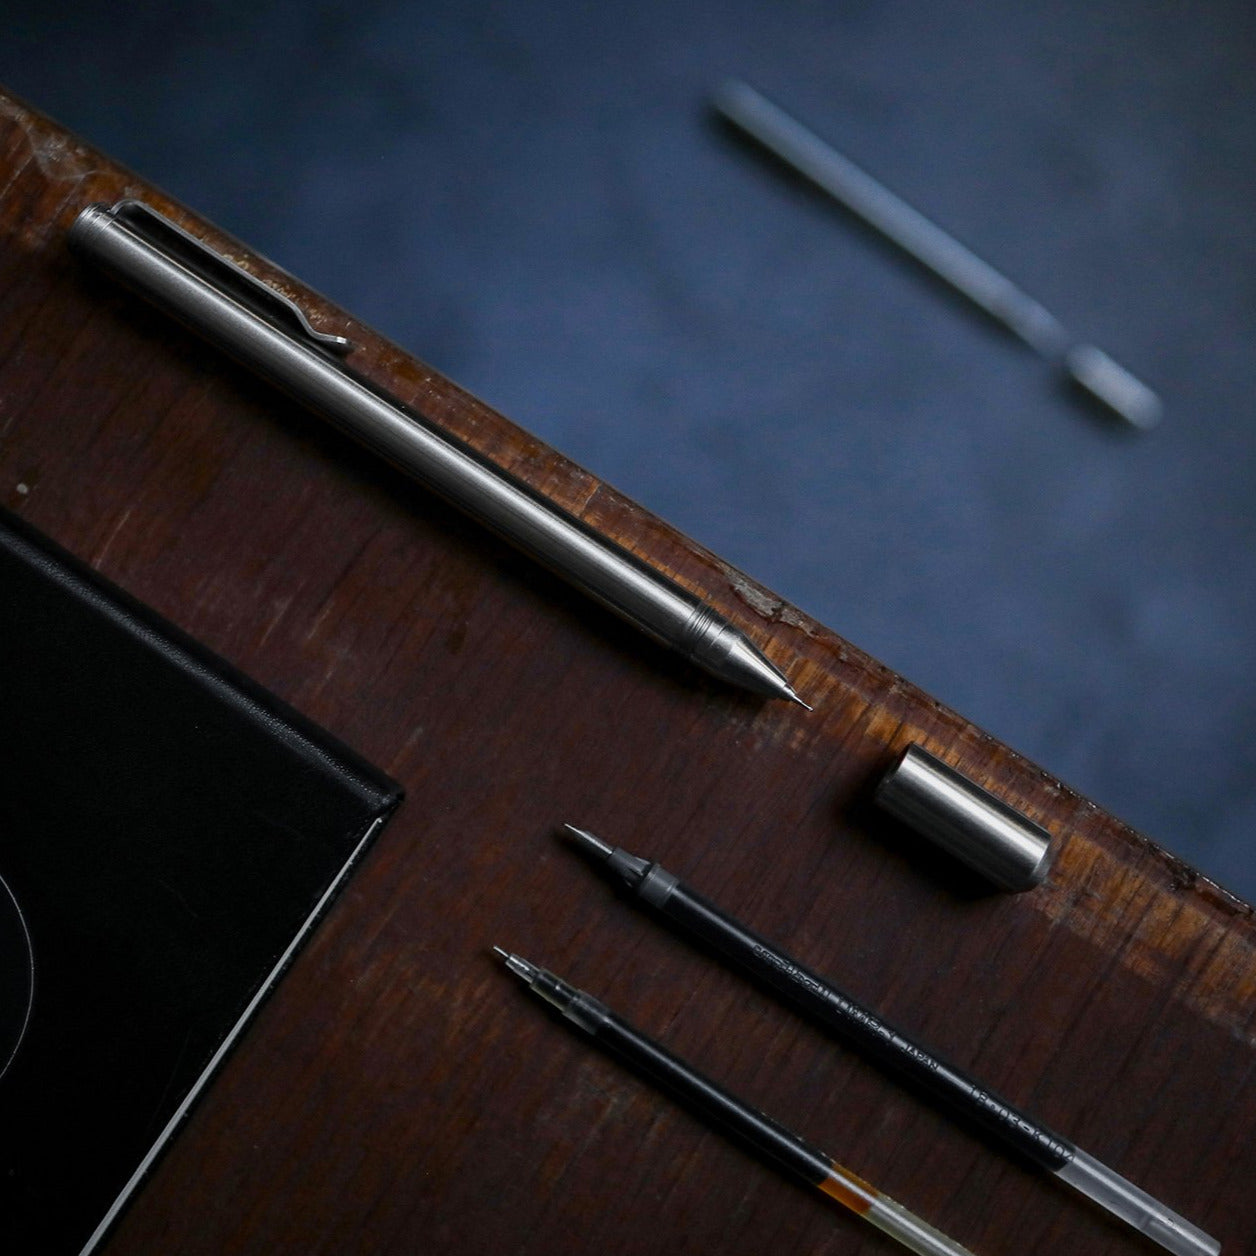 PHX-Pen : A Timeless Stainless Steel Pen